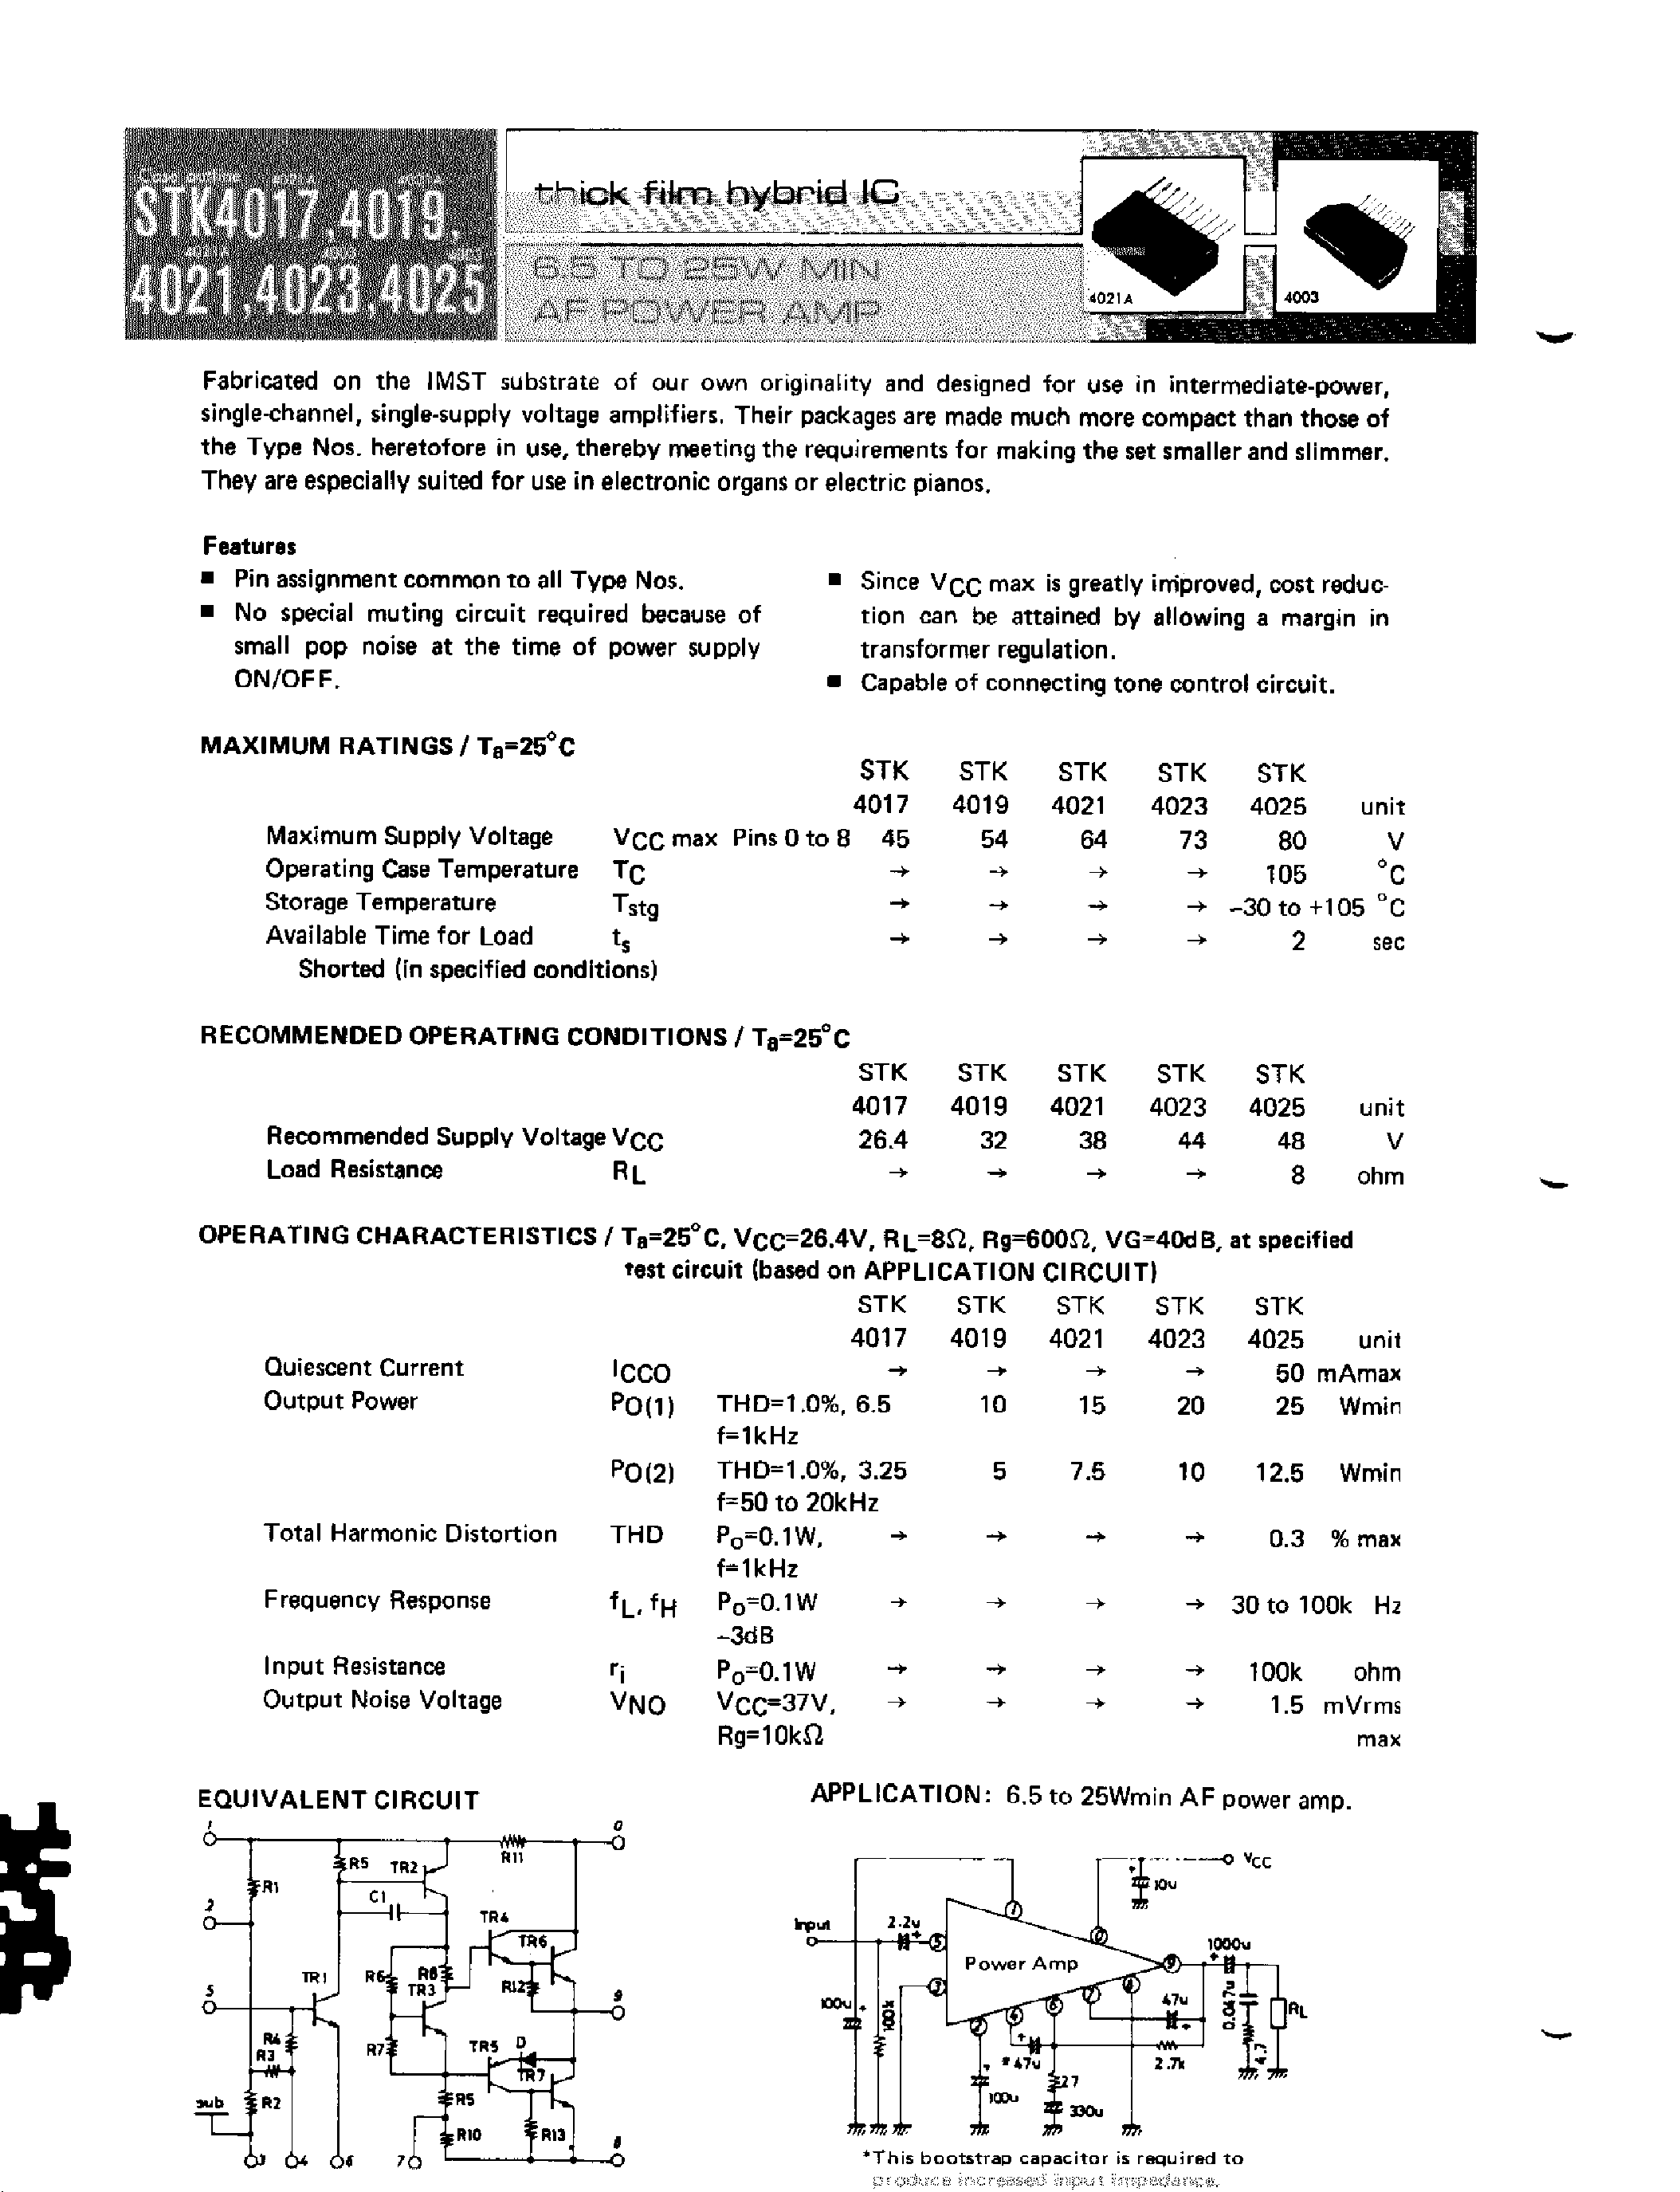 Datasheet STK-4017 - (STK4017 - STK4025) 6.5 TO 25E MIN AF POWER AMP page 1